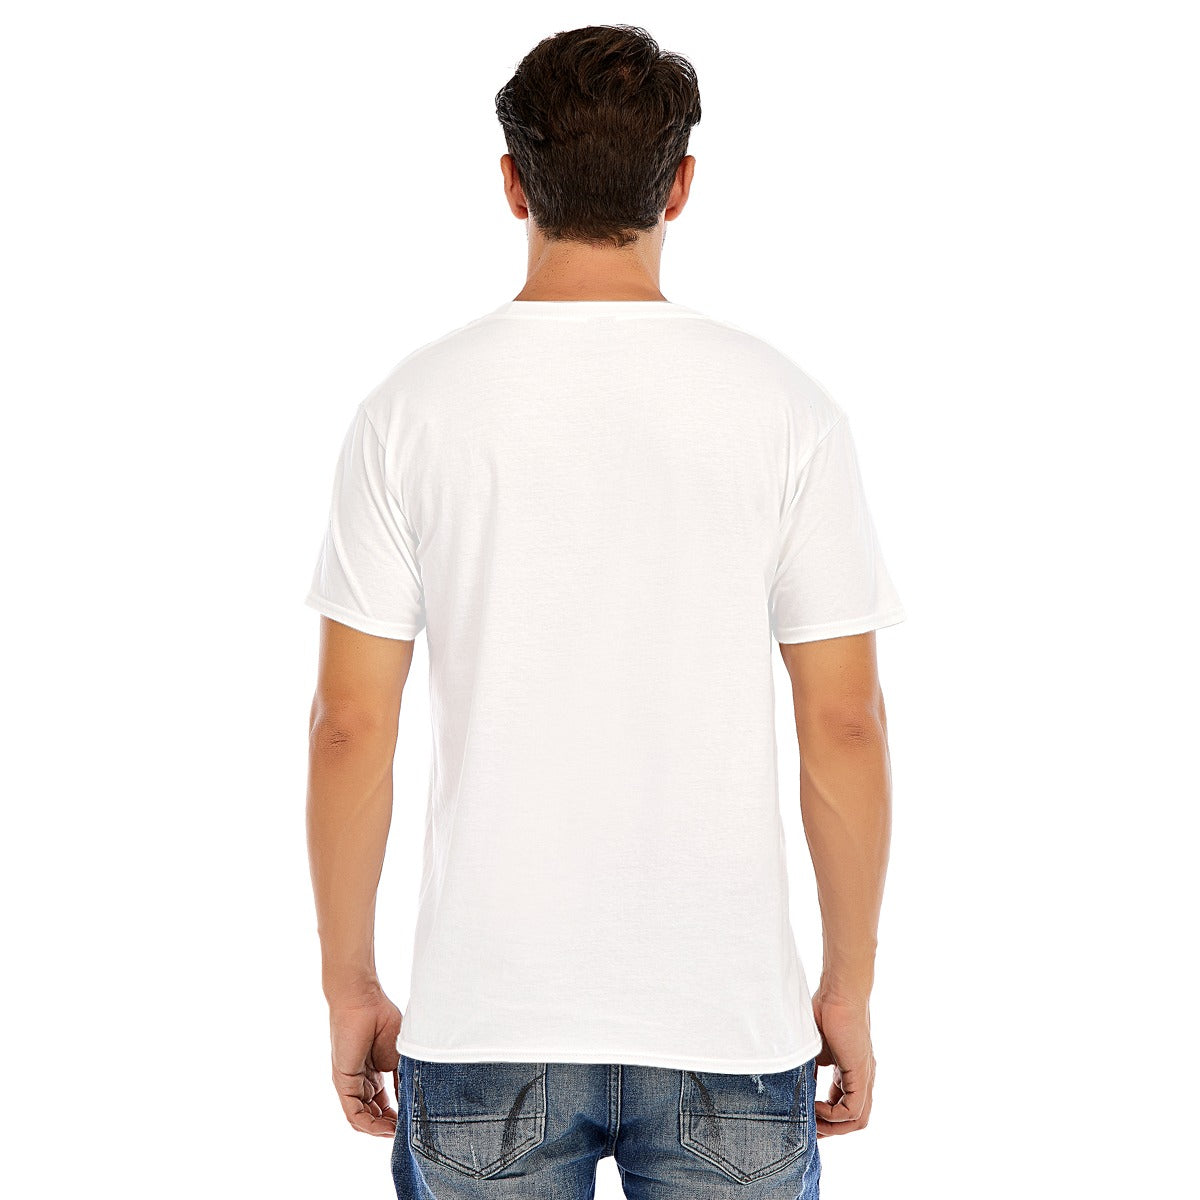 Trashed Wing Shamrocks Cotton T-shirt - Dark